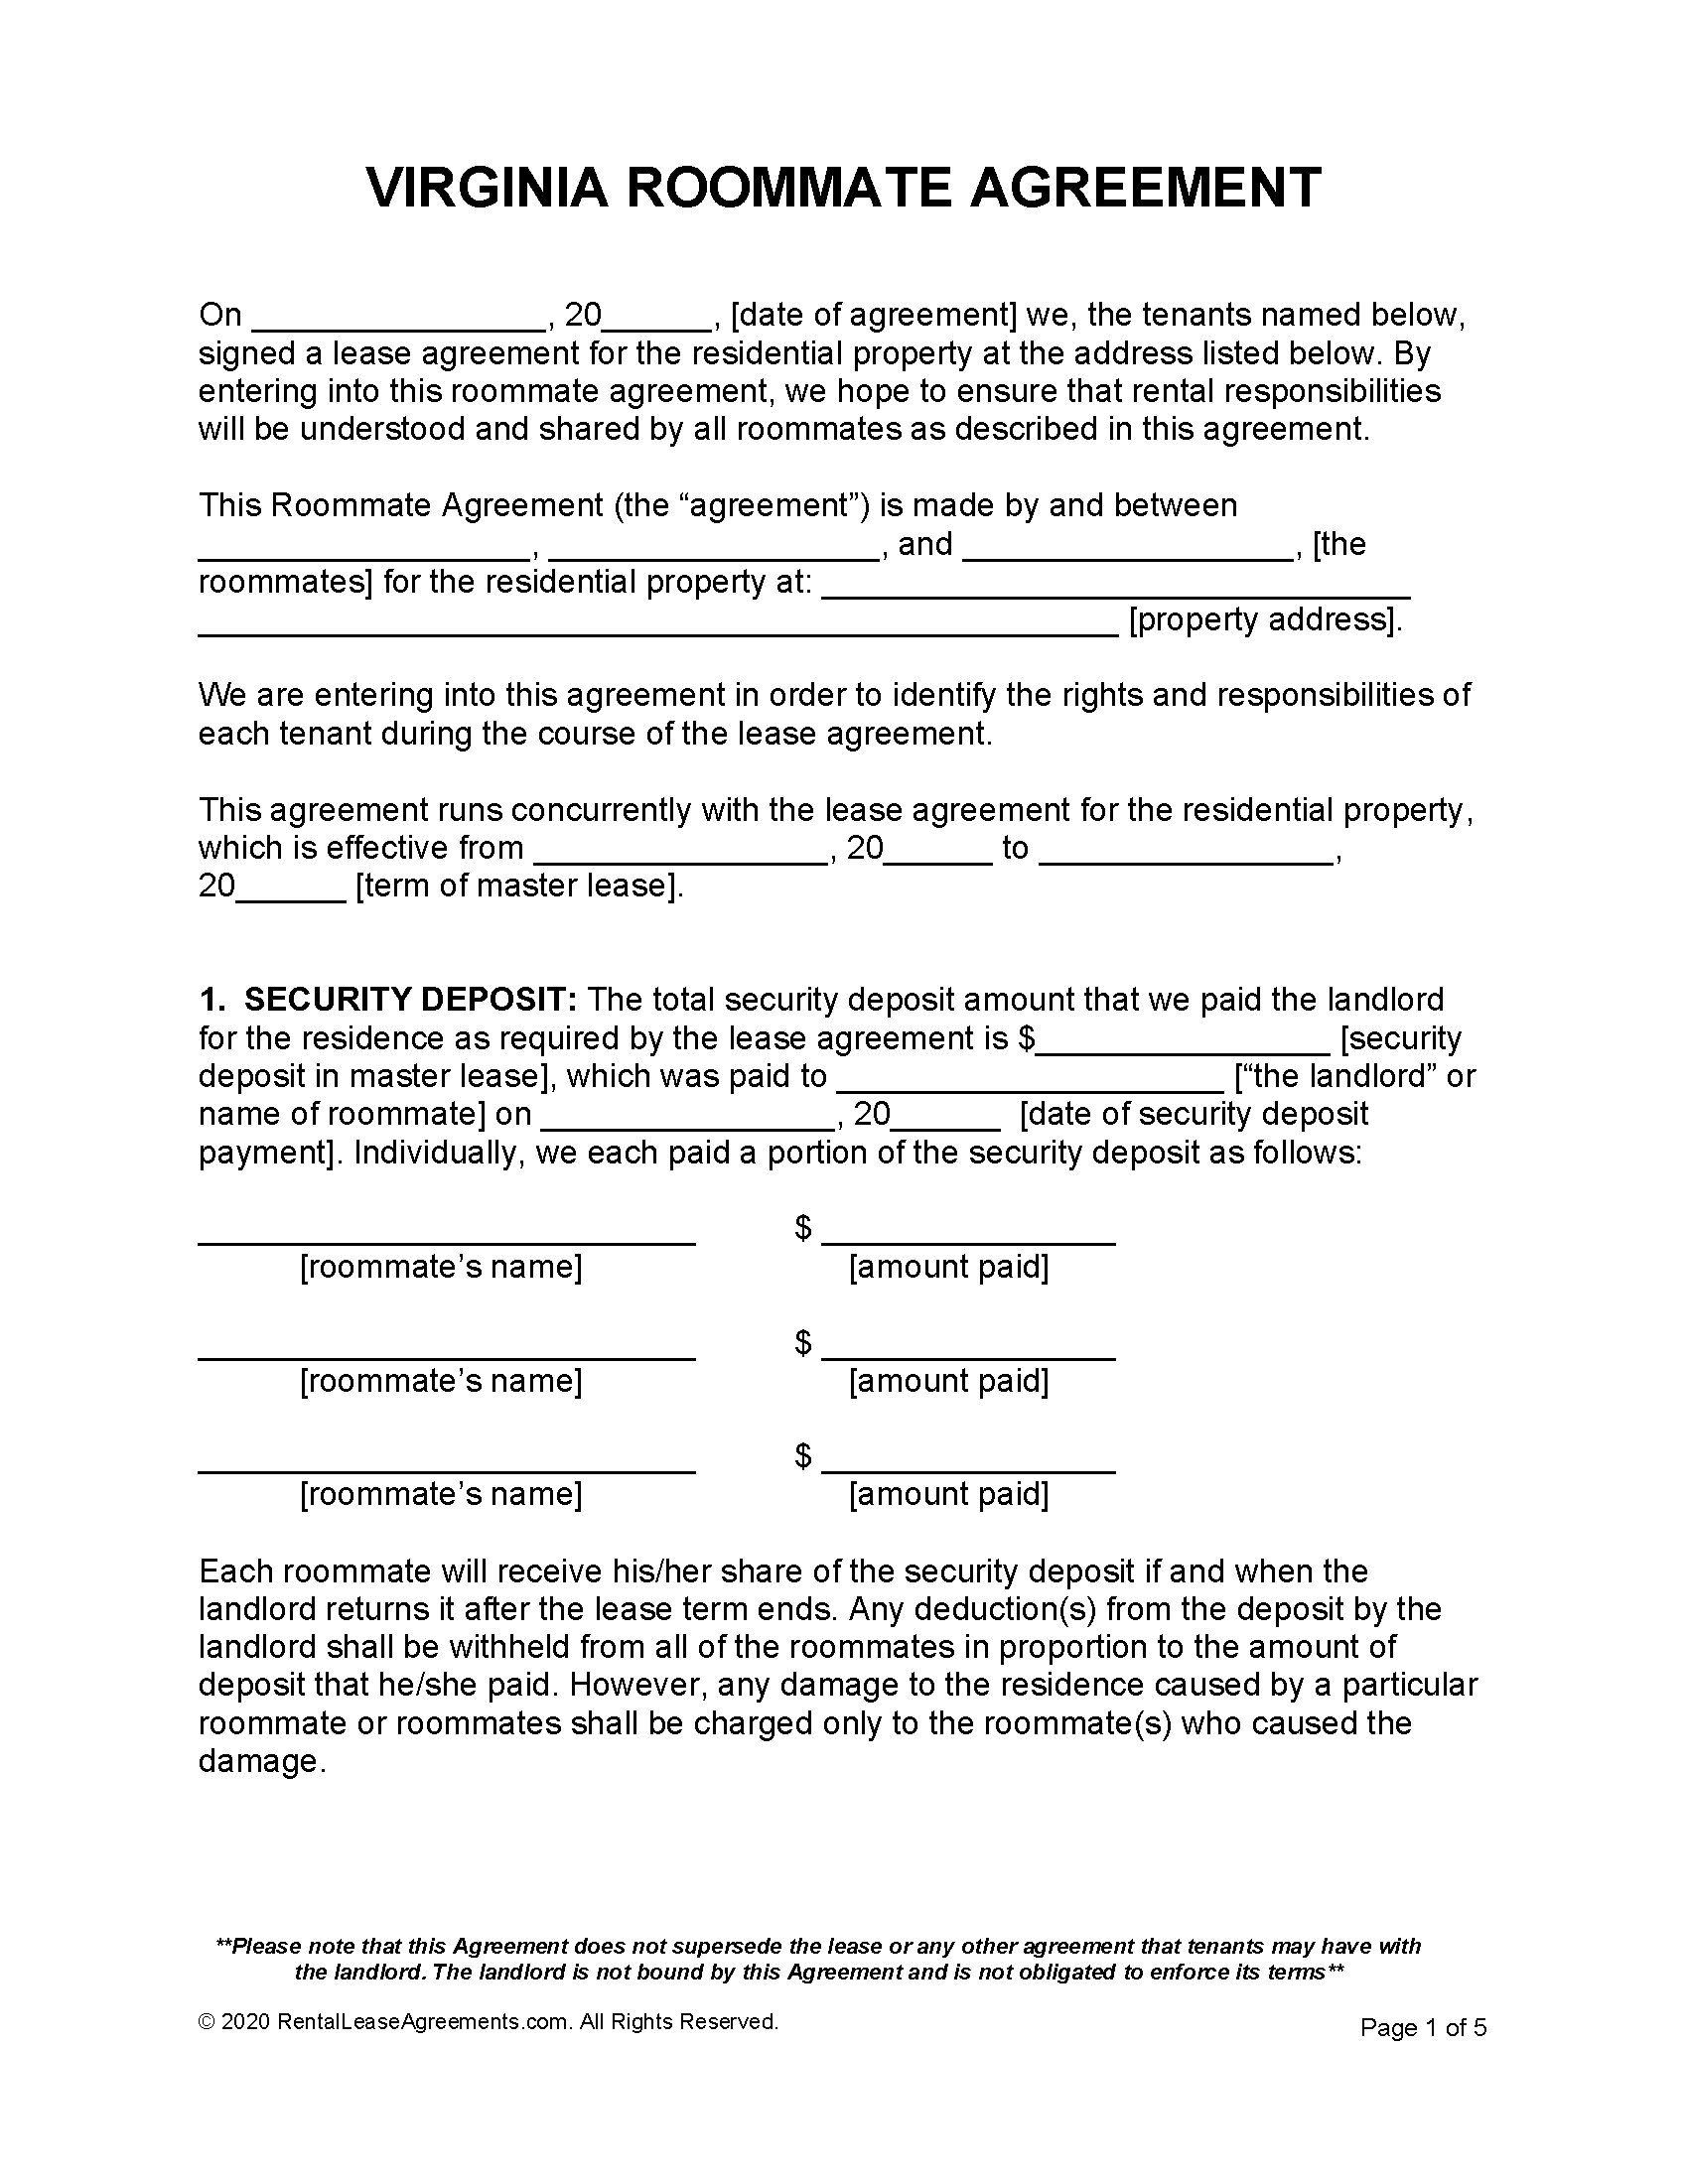 free-virginia-roommate-agreement-pdf-ms-word